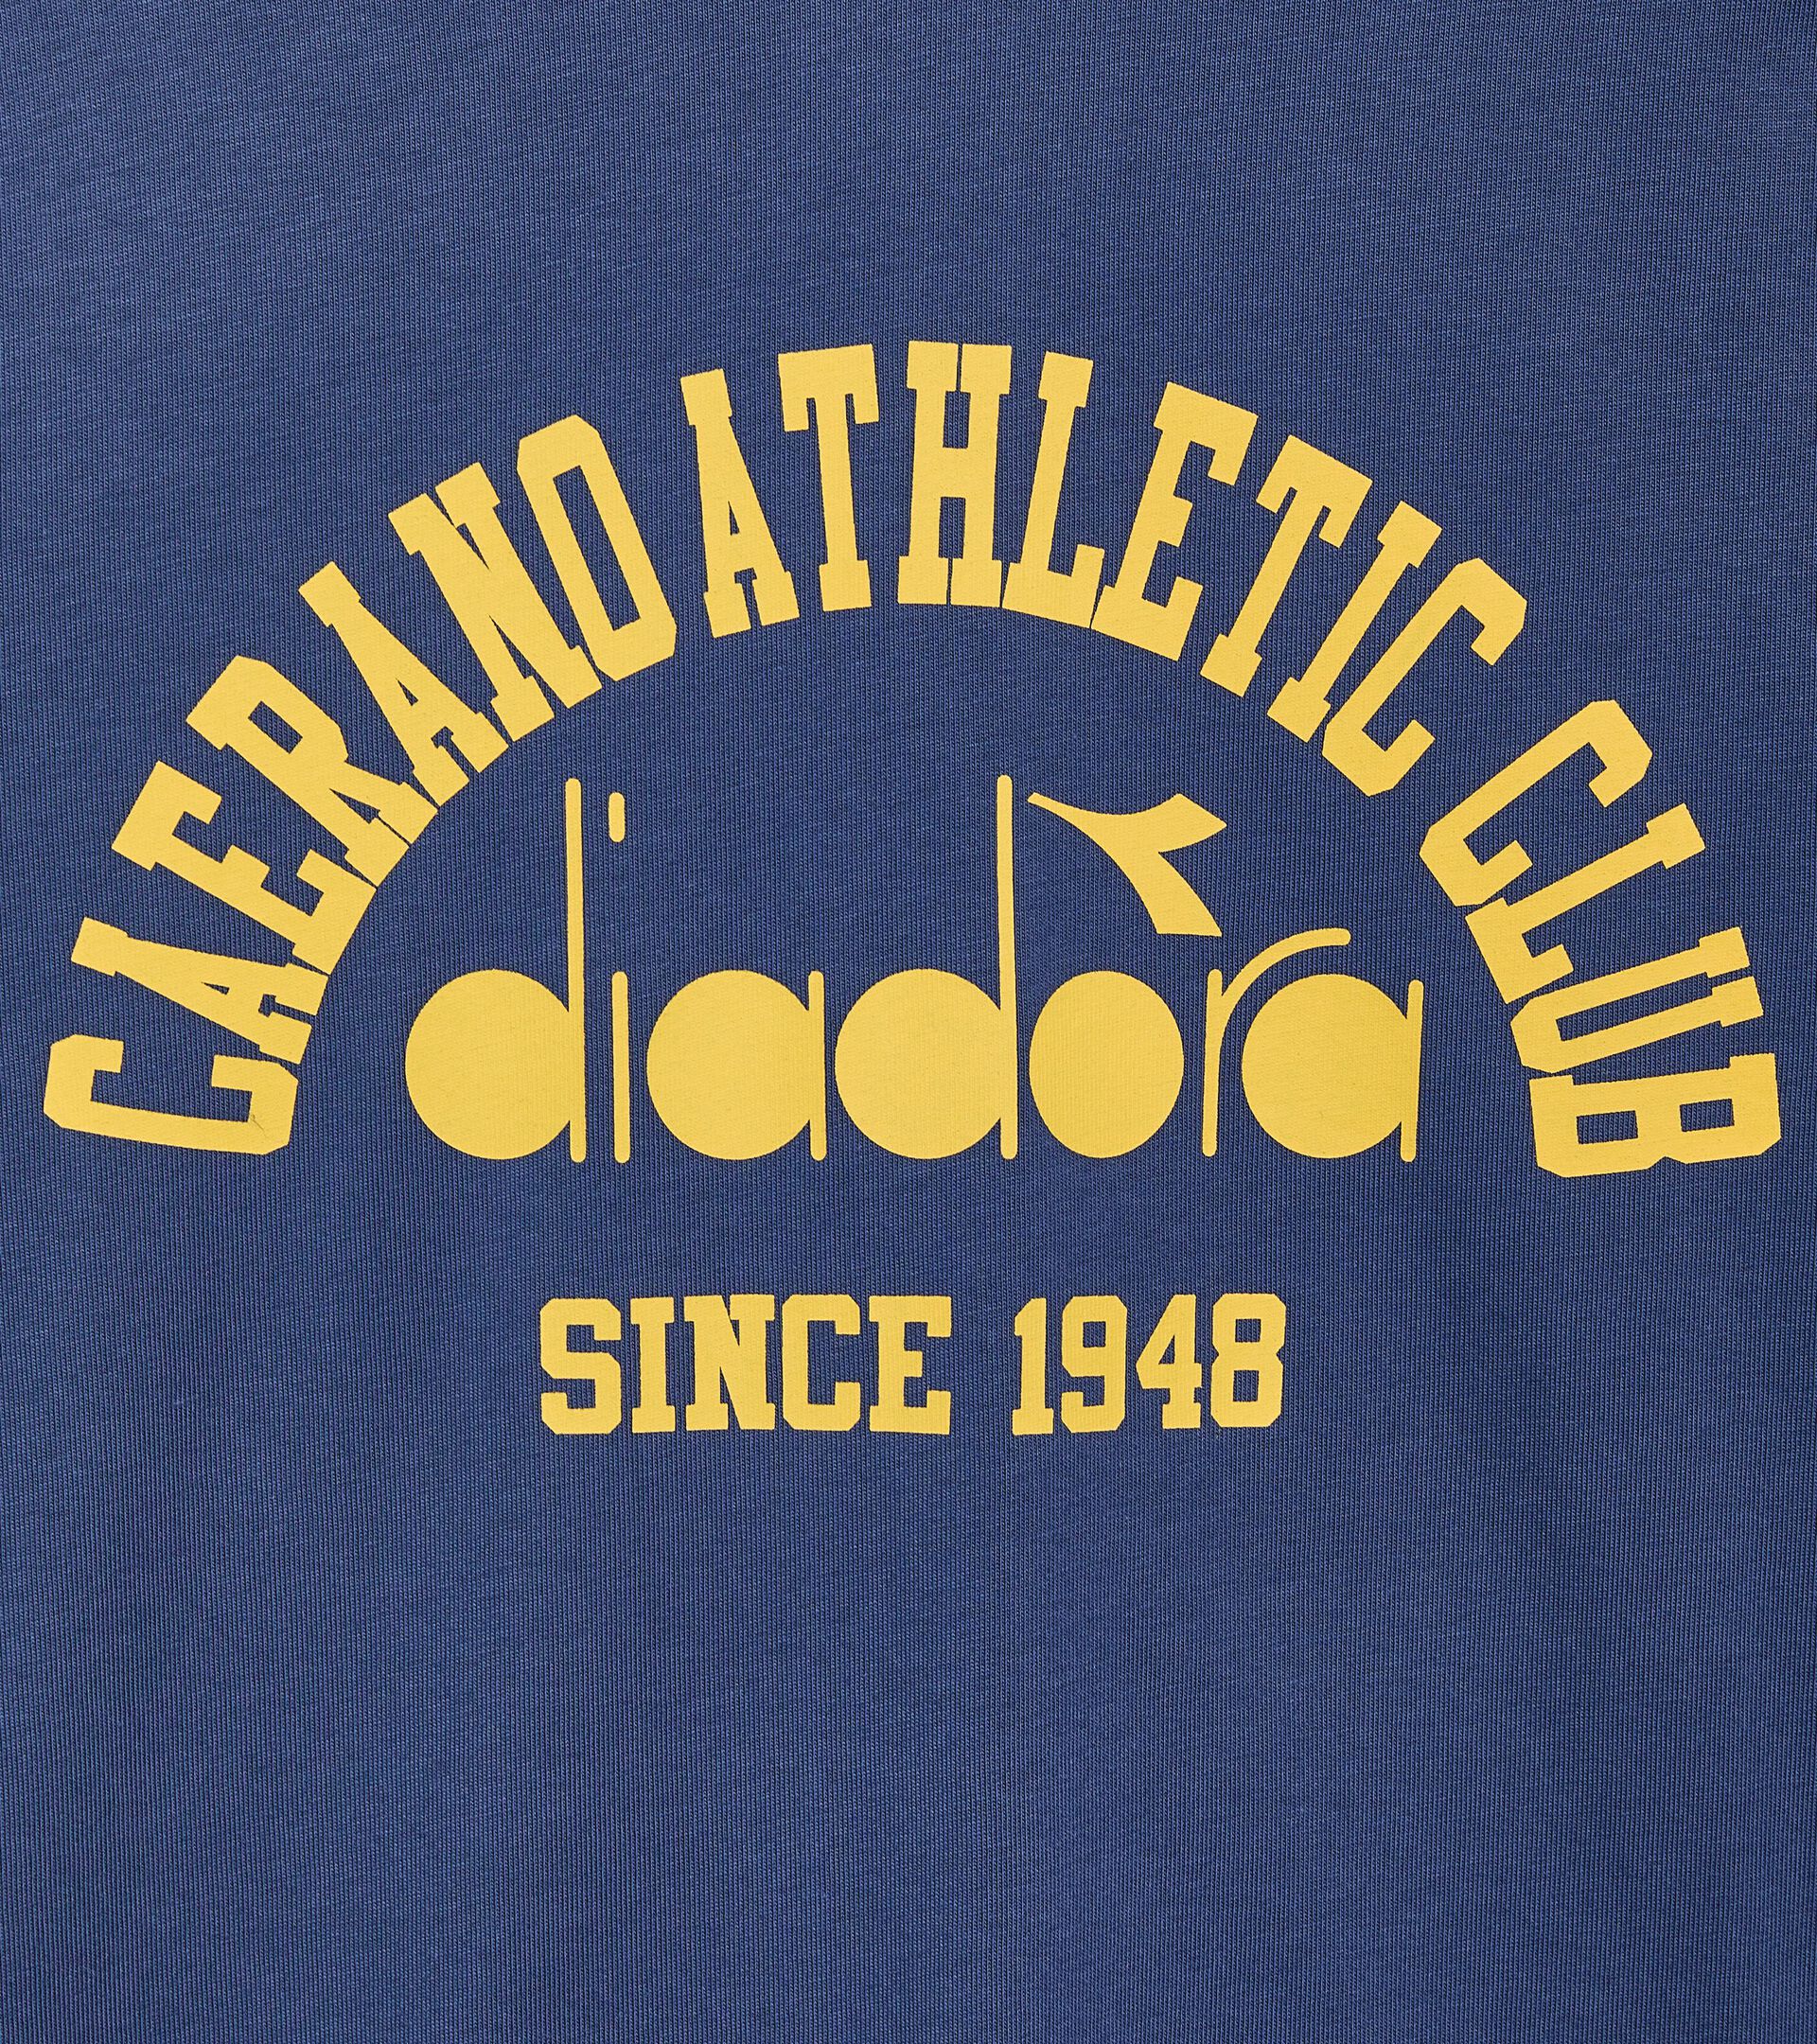 Sportliches T-Shirt - Gender Neutral T-SHIRT SS 1948 ATHL. CLUB OCEANA - Diadora